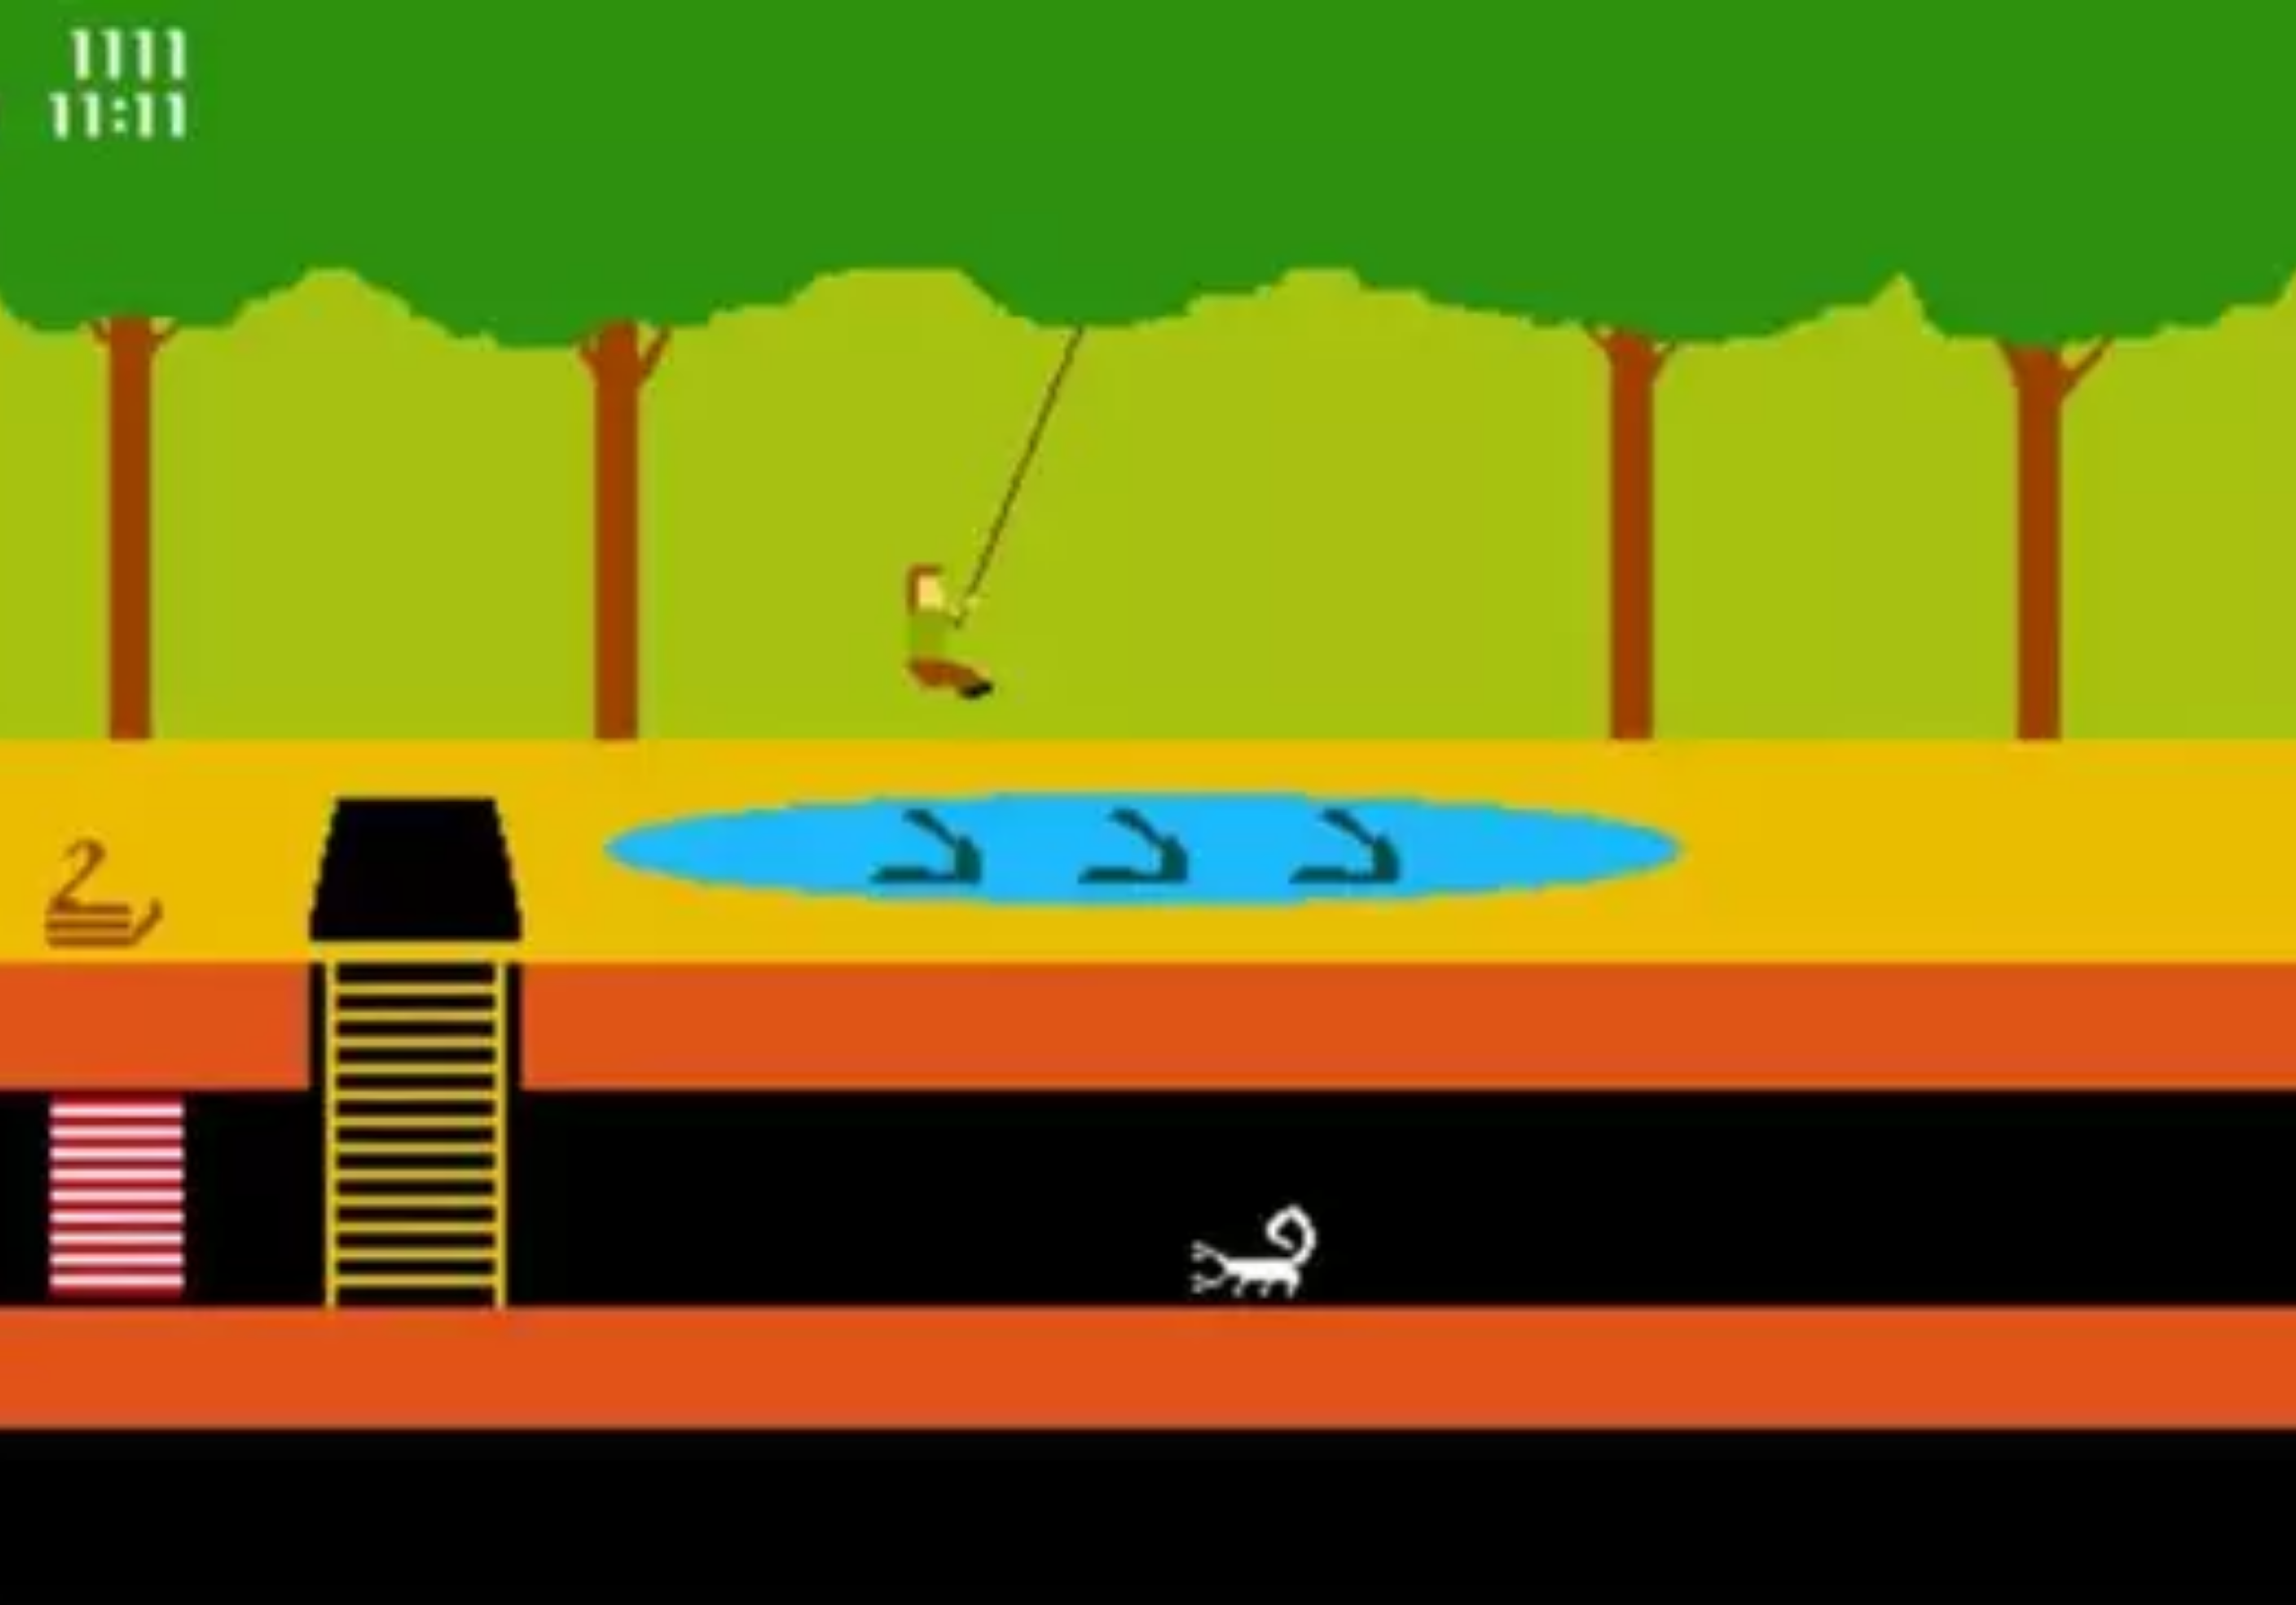 River Raid Atari 2600 gameplay - Jogos de Atari 